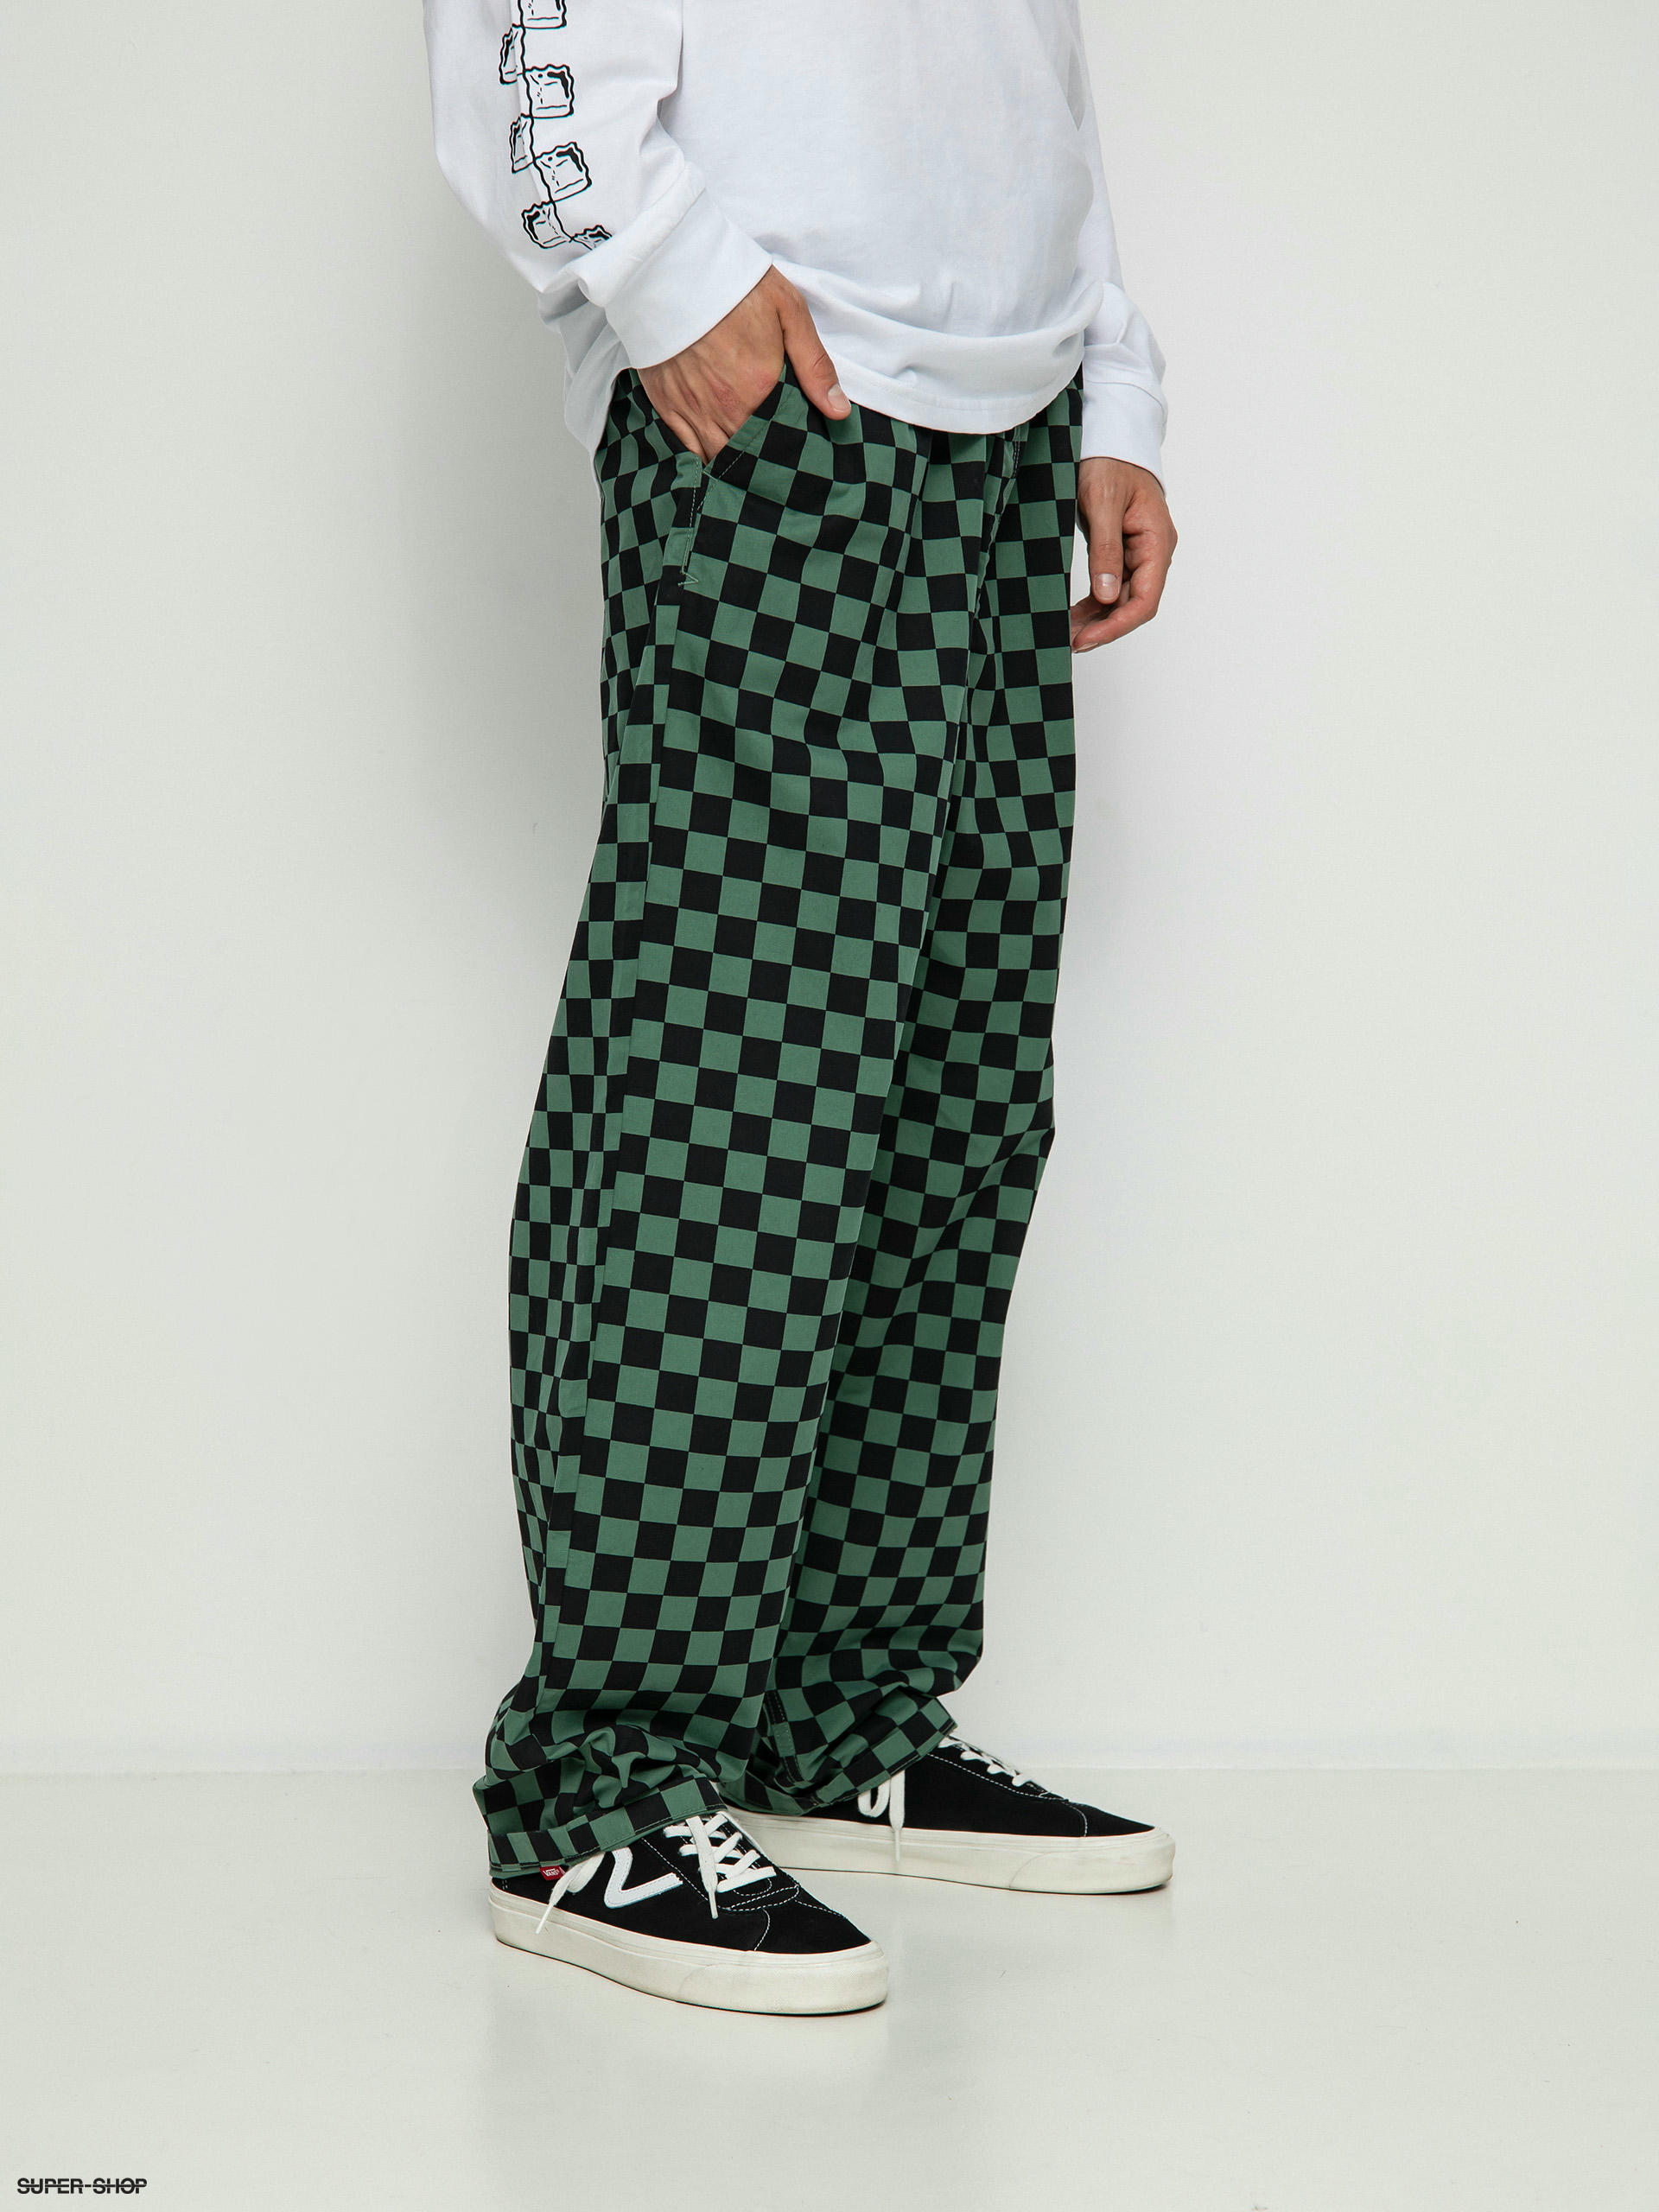  RANGE CARGO BAGGY TAPERED ELASTIC PANT GRAPE LEAF/LODEN  GREEN - men's trousers - VANS - 61.83 € - outdoorové oblečení a vybavení  shop